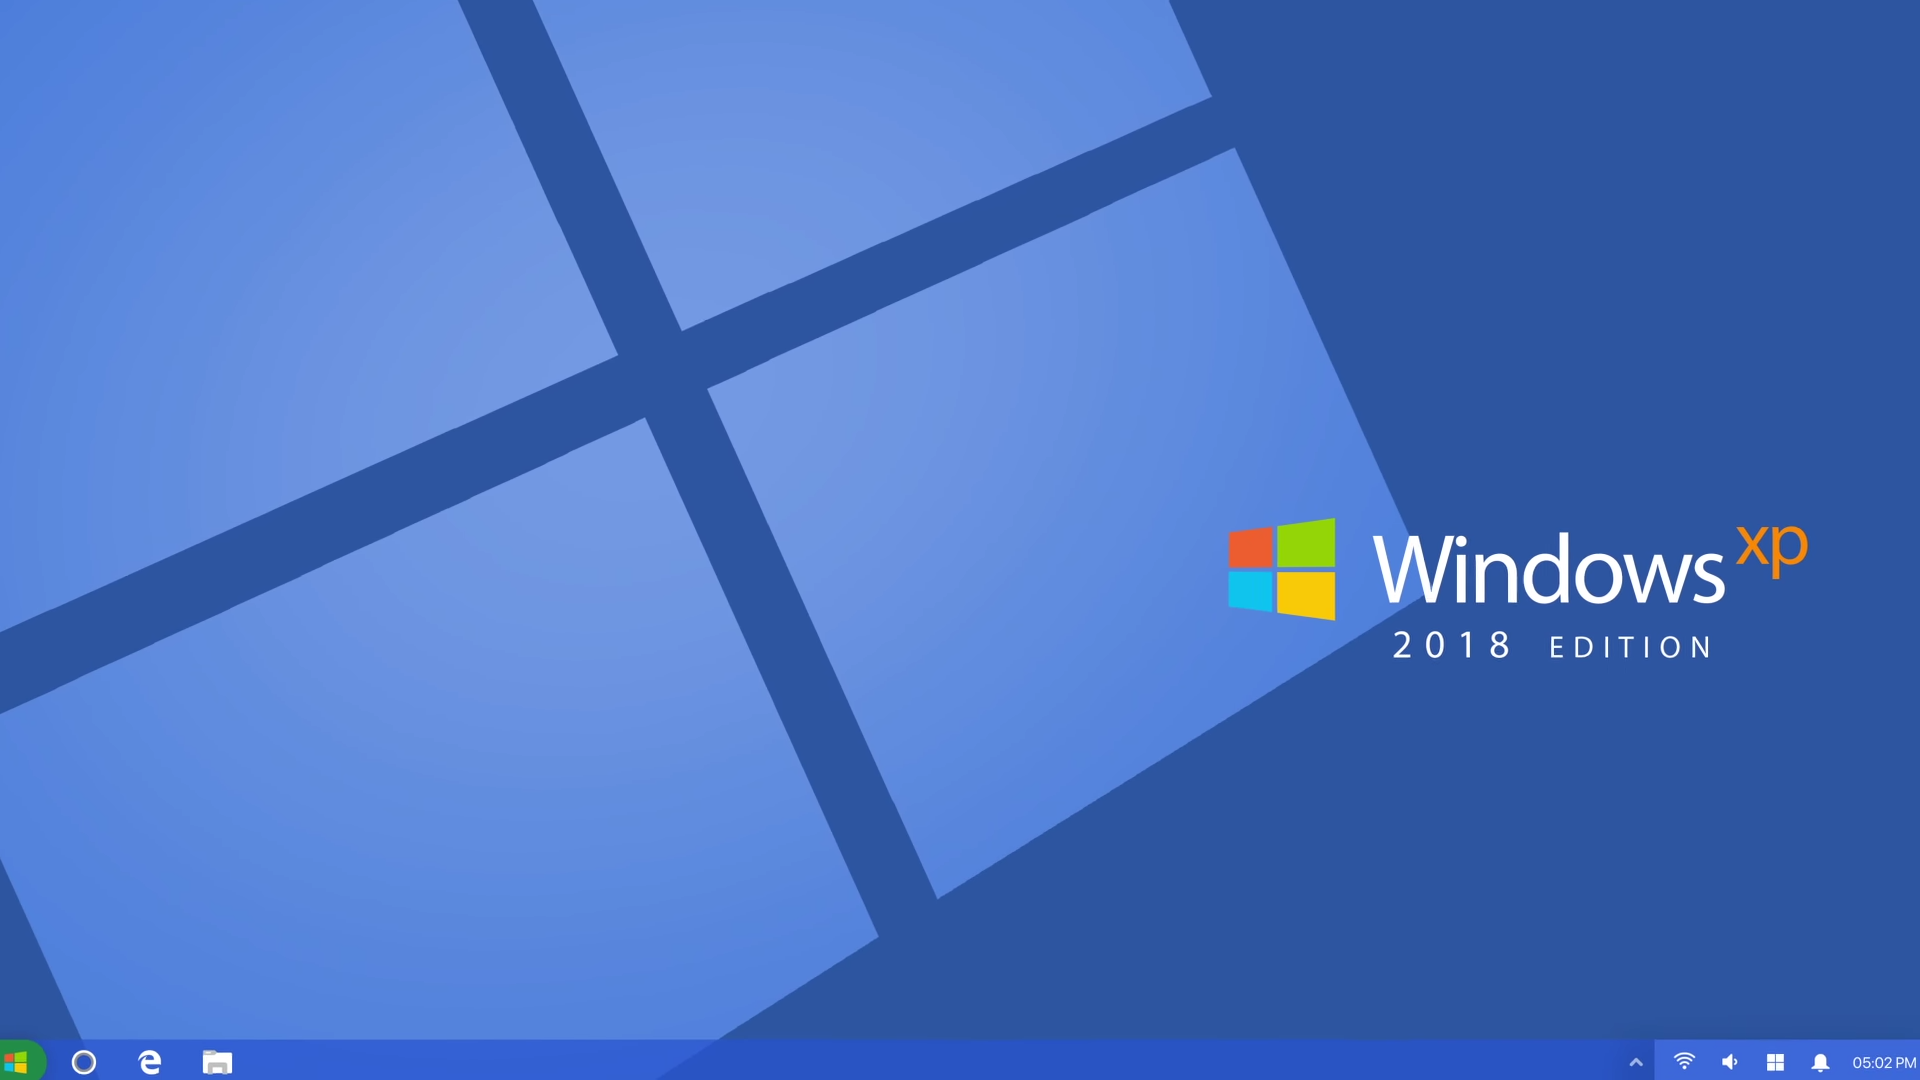 Windows Xp 2018 Edition - HD Wallpaper 